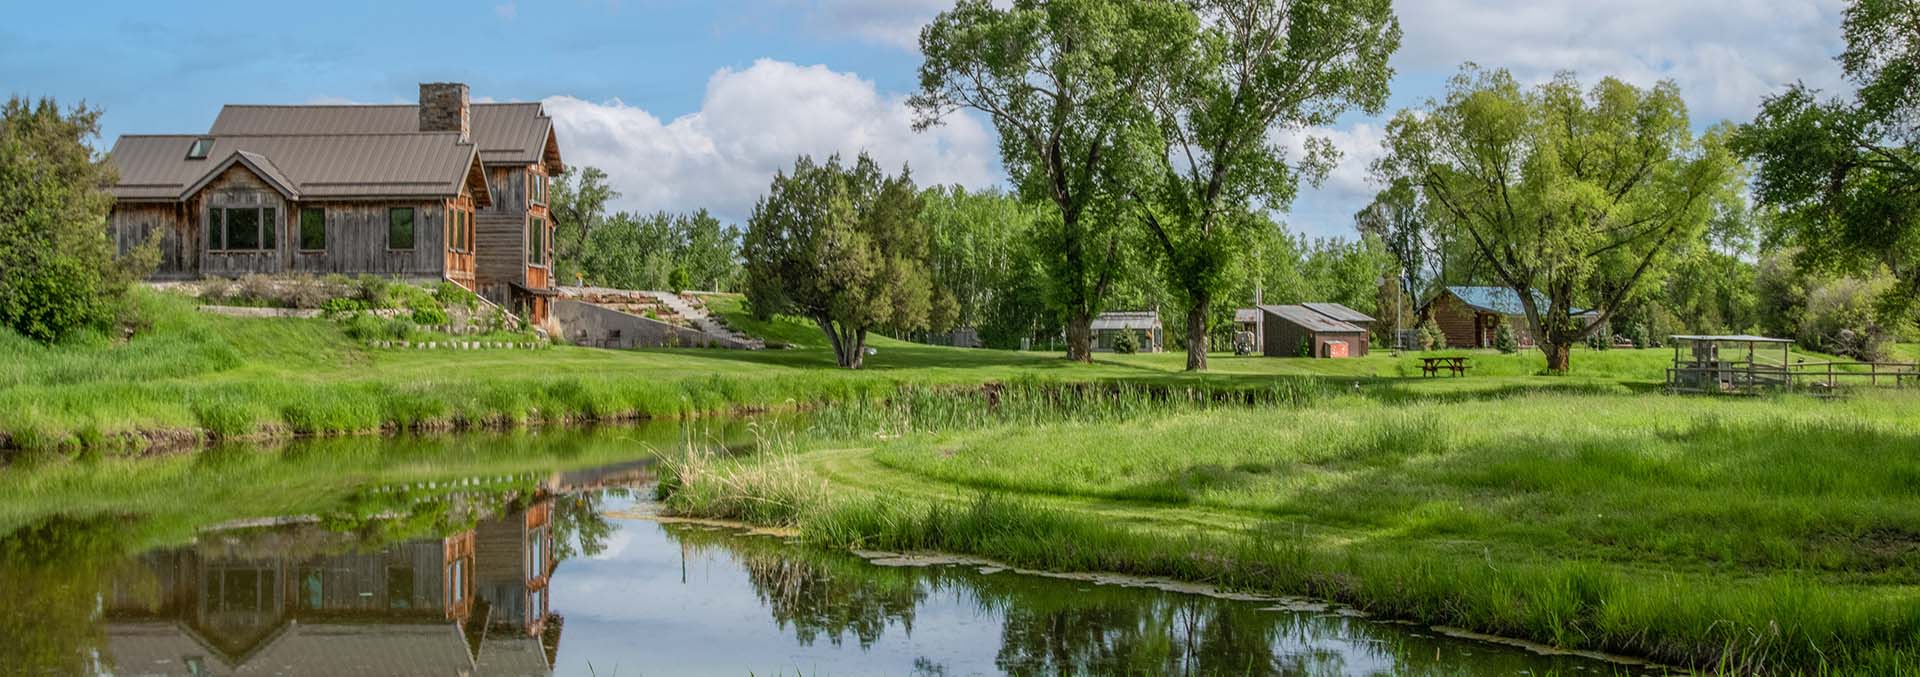 montana house for sale shields river retreat